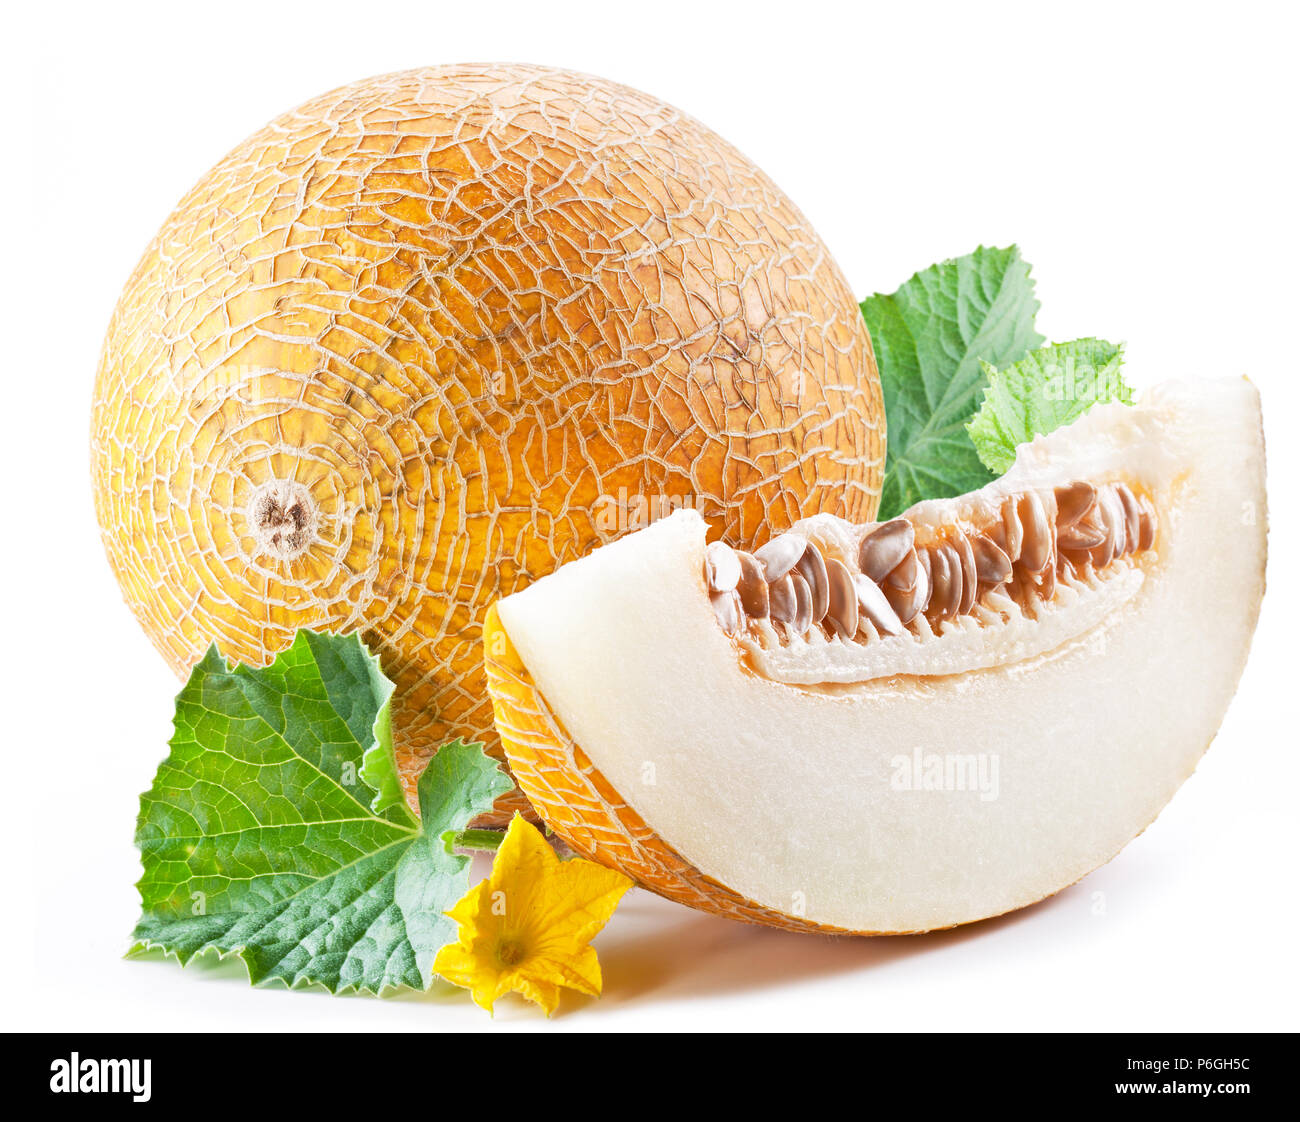 Ripe melon and melon slice on white background. Stock Photo